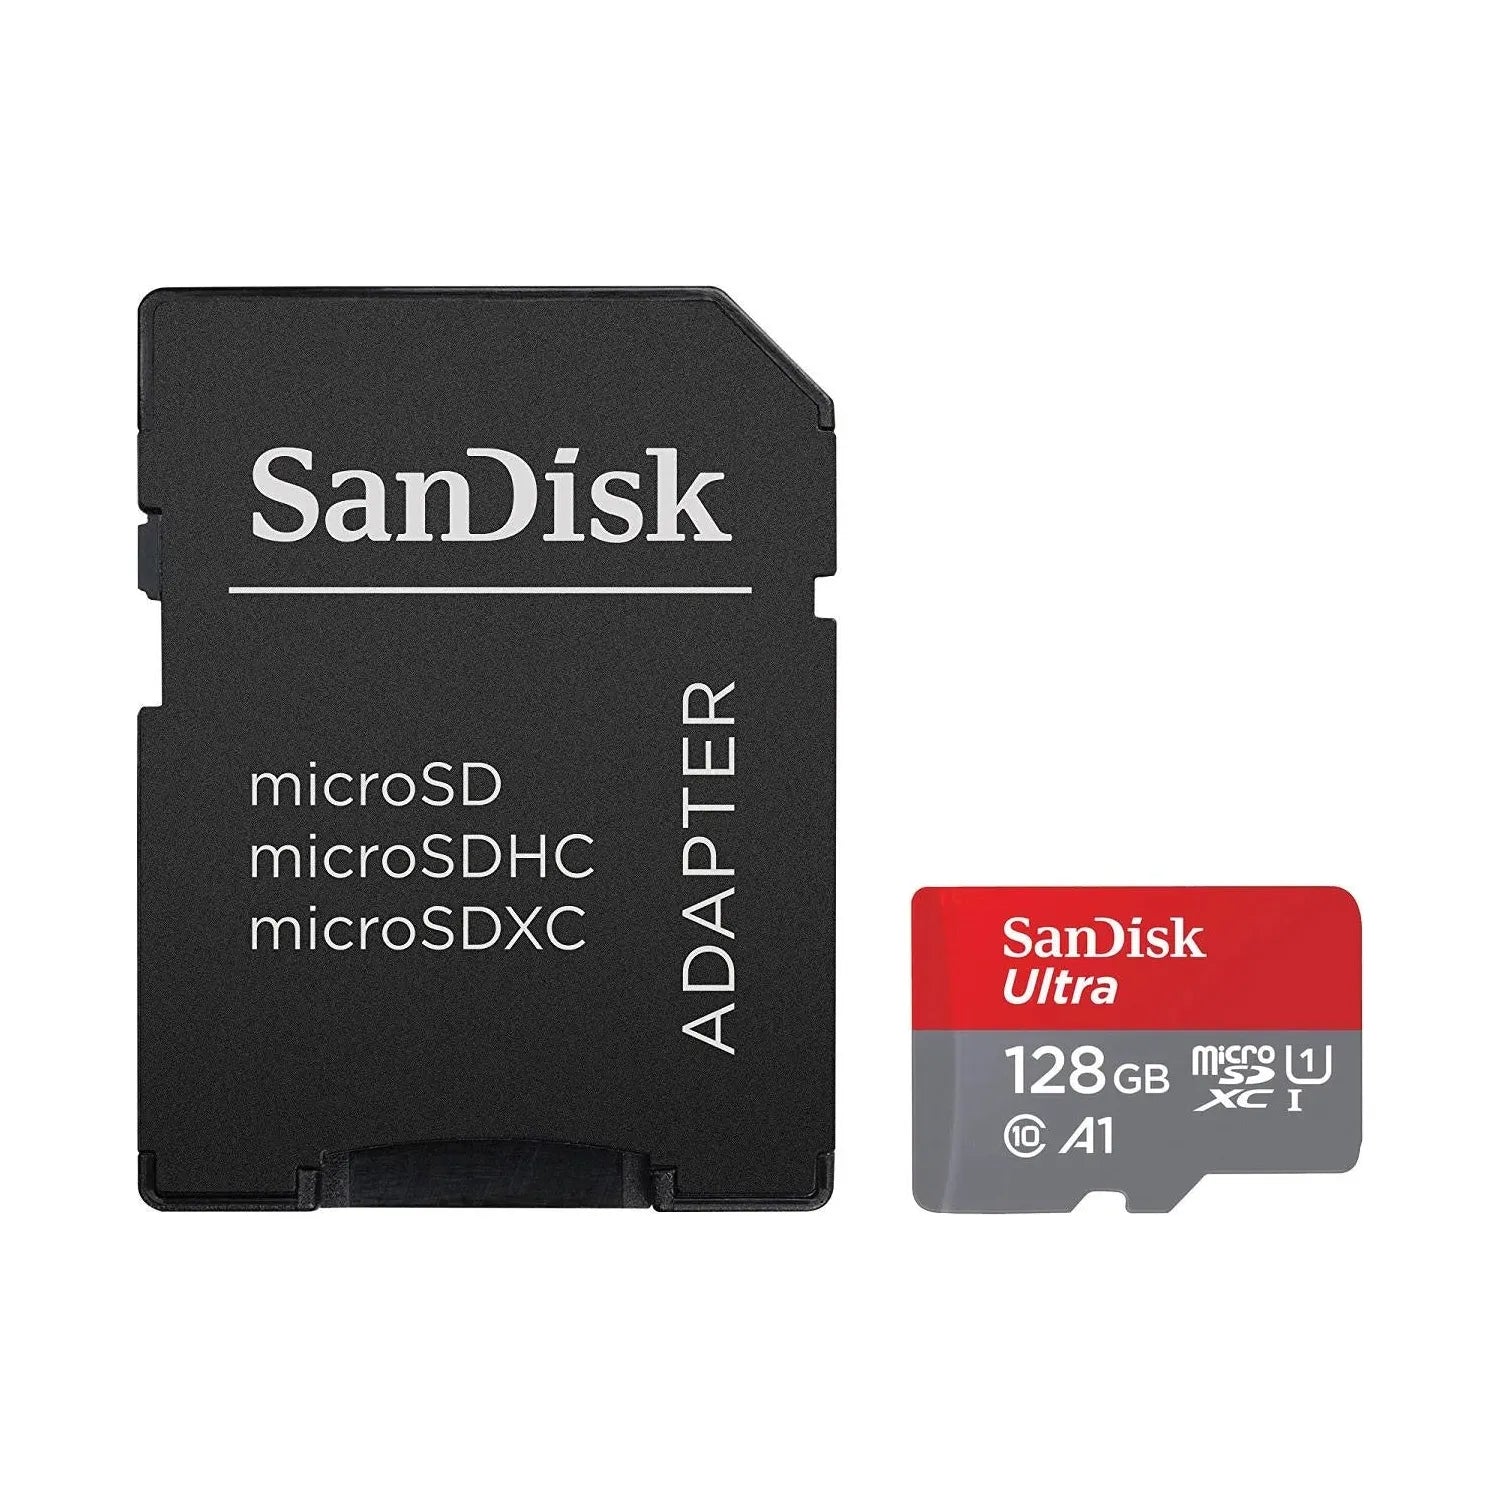 SanDisk carte mémoire microSDXC Ultra - 128 GB - EdTools